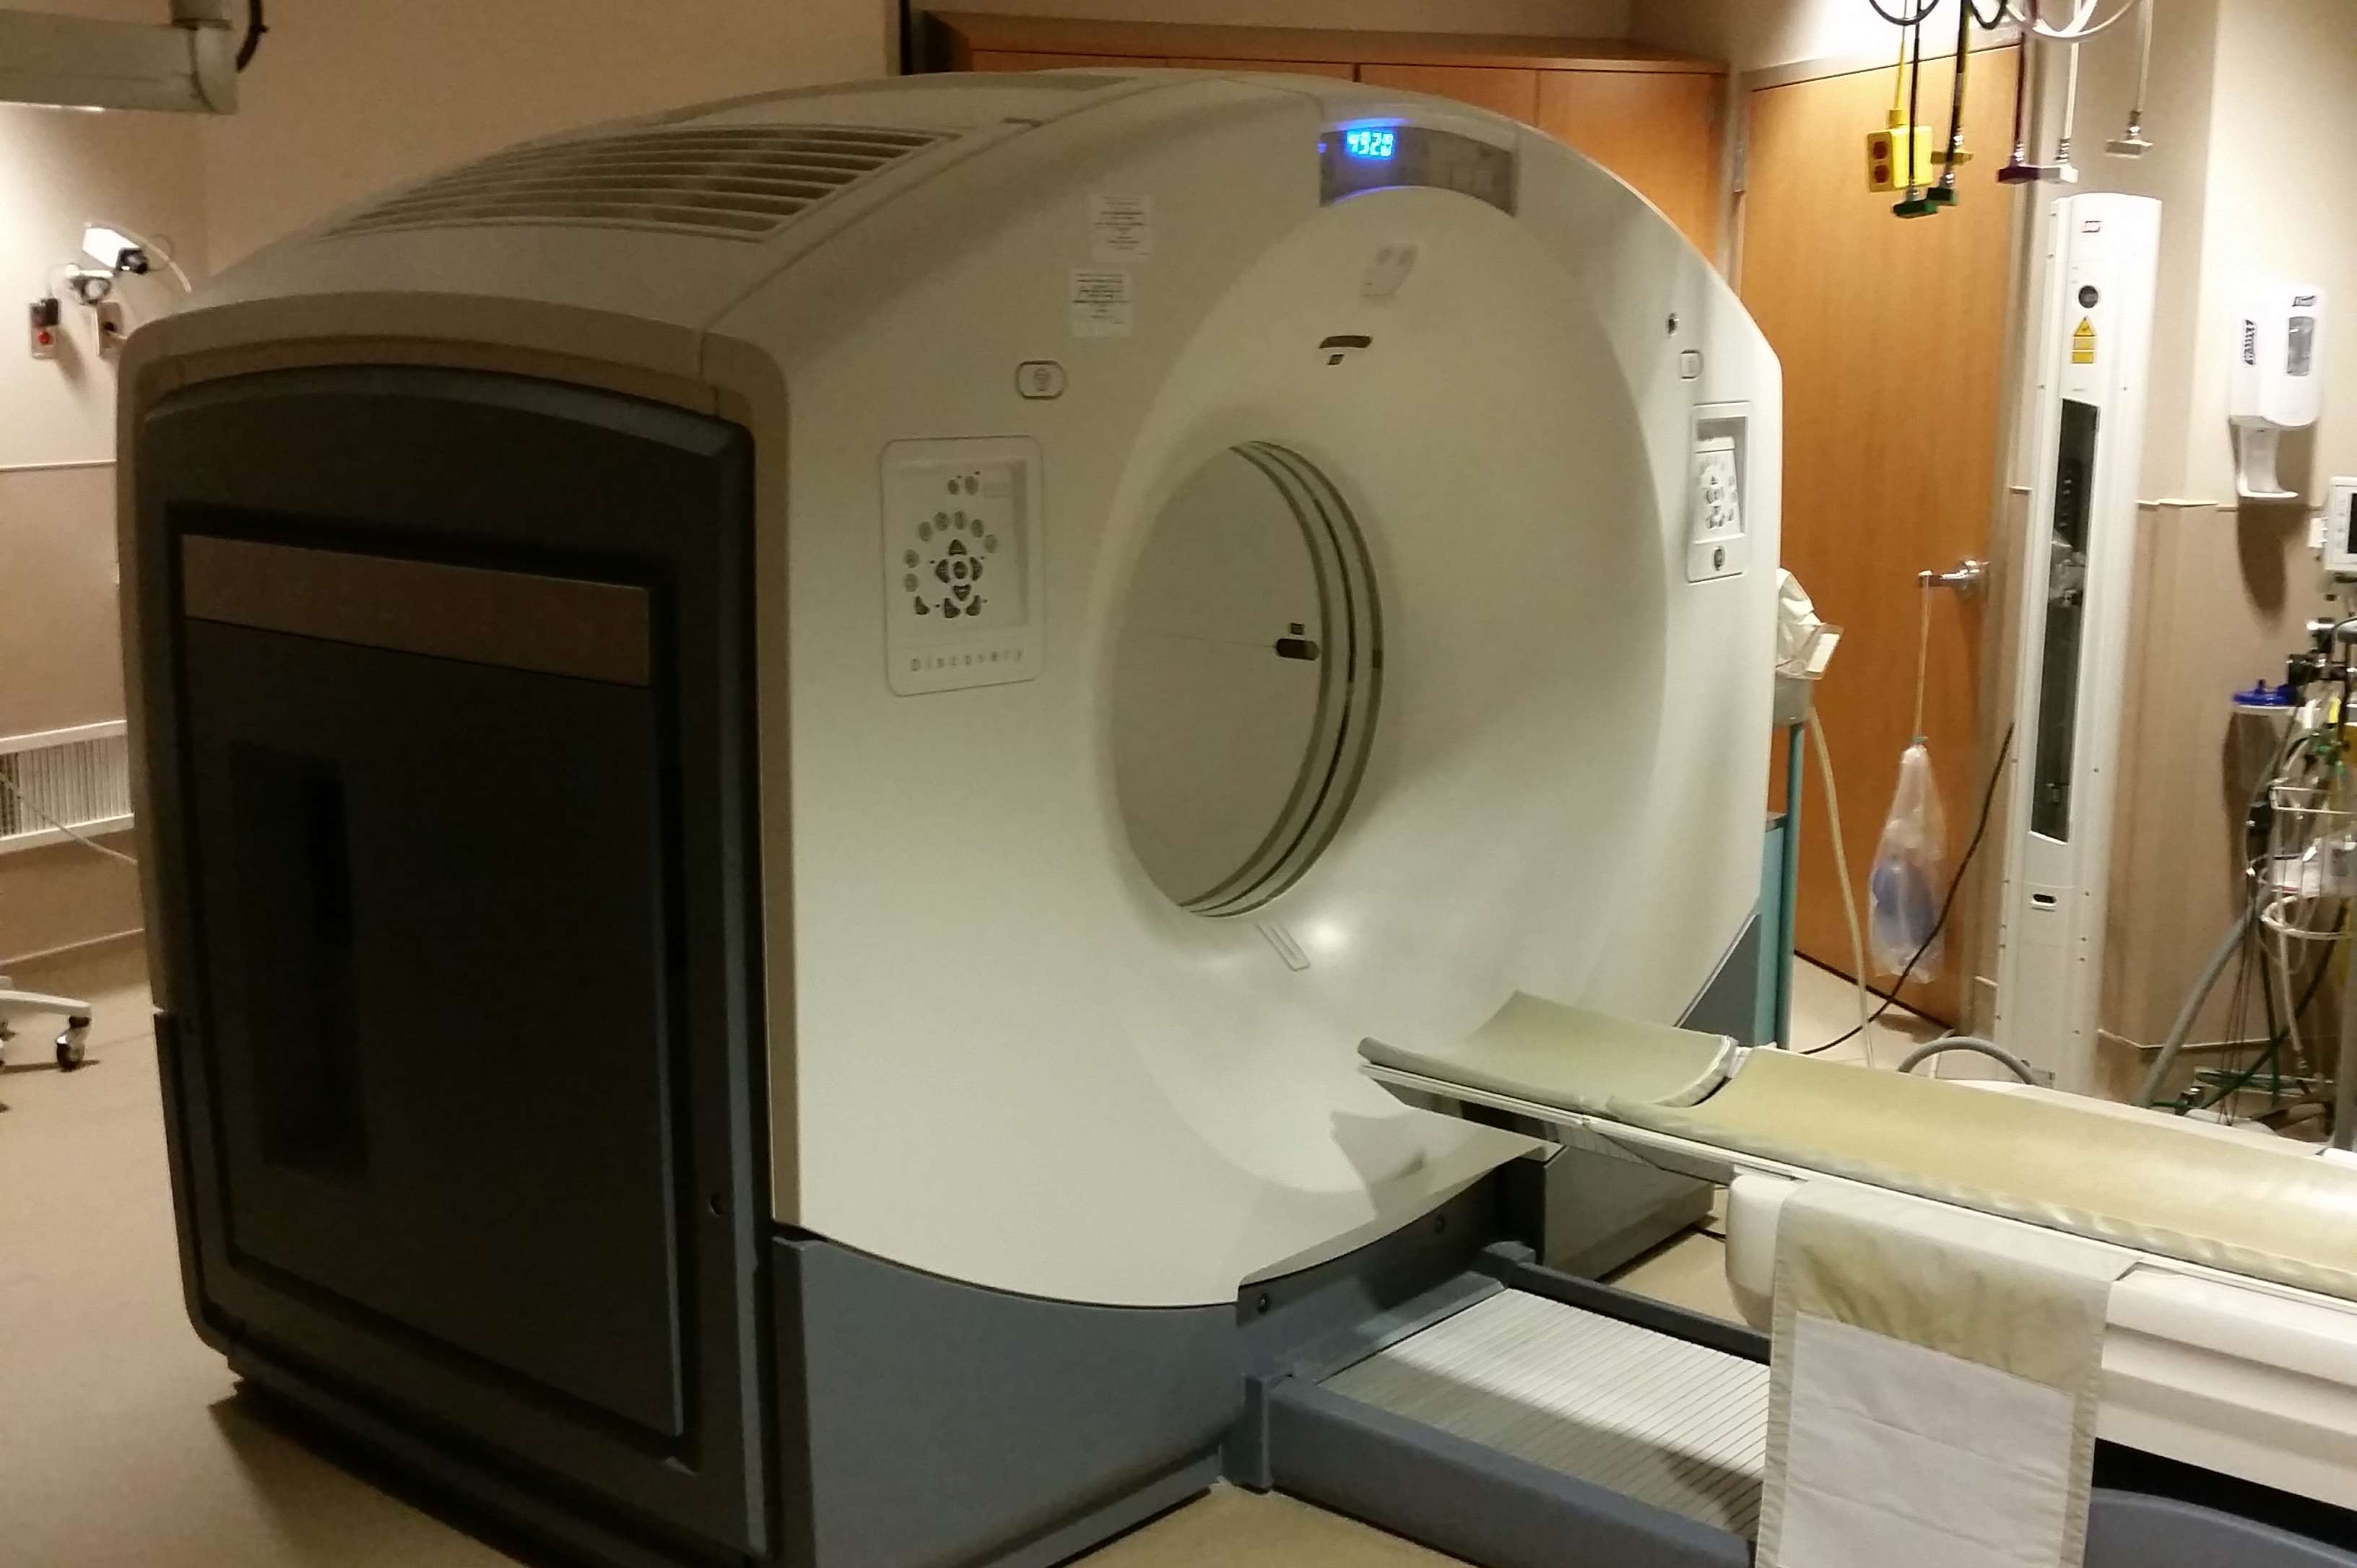 PET scan imaging equipment